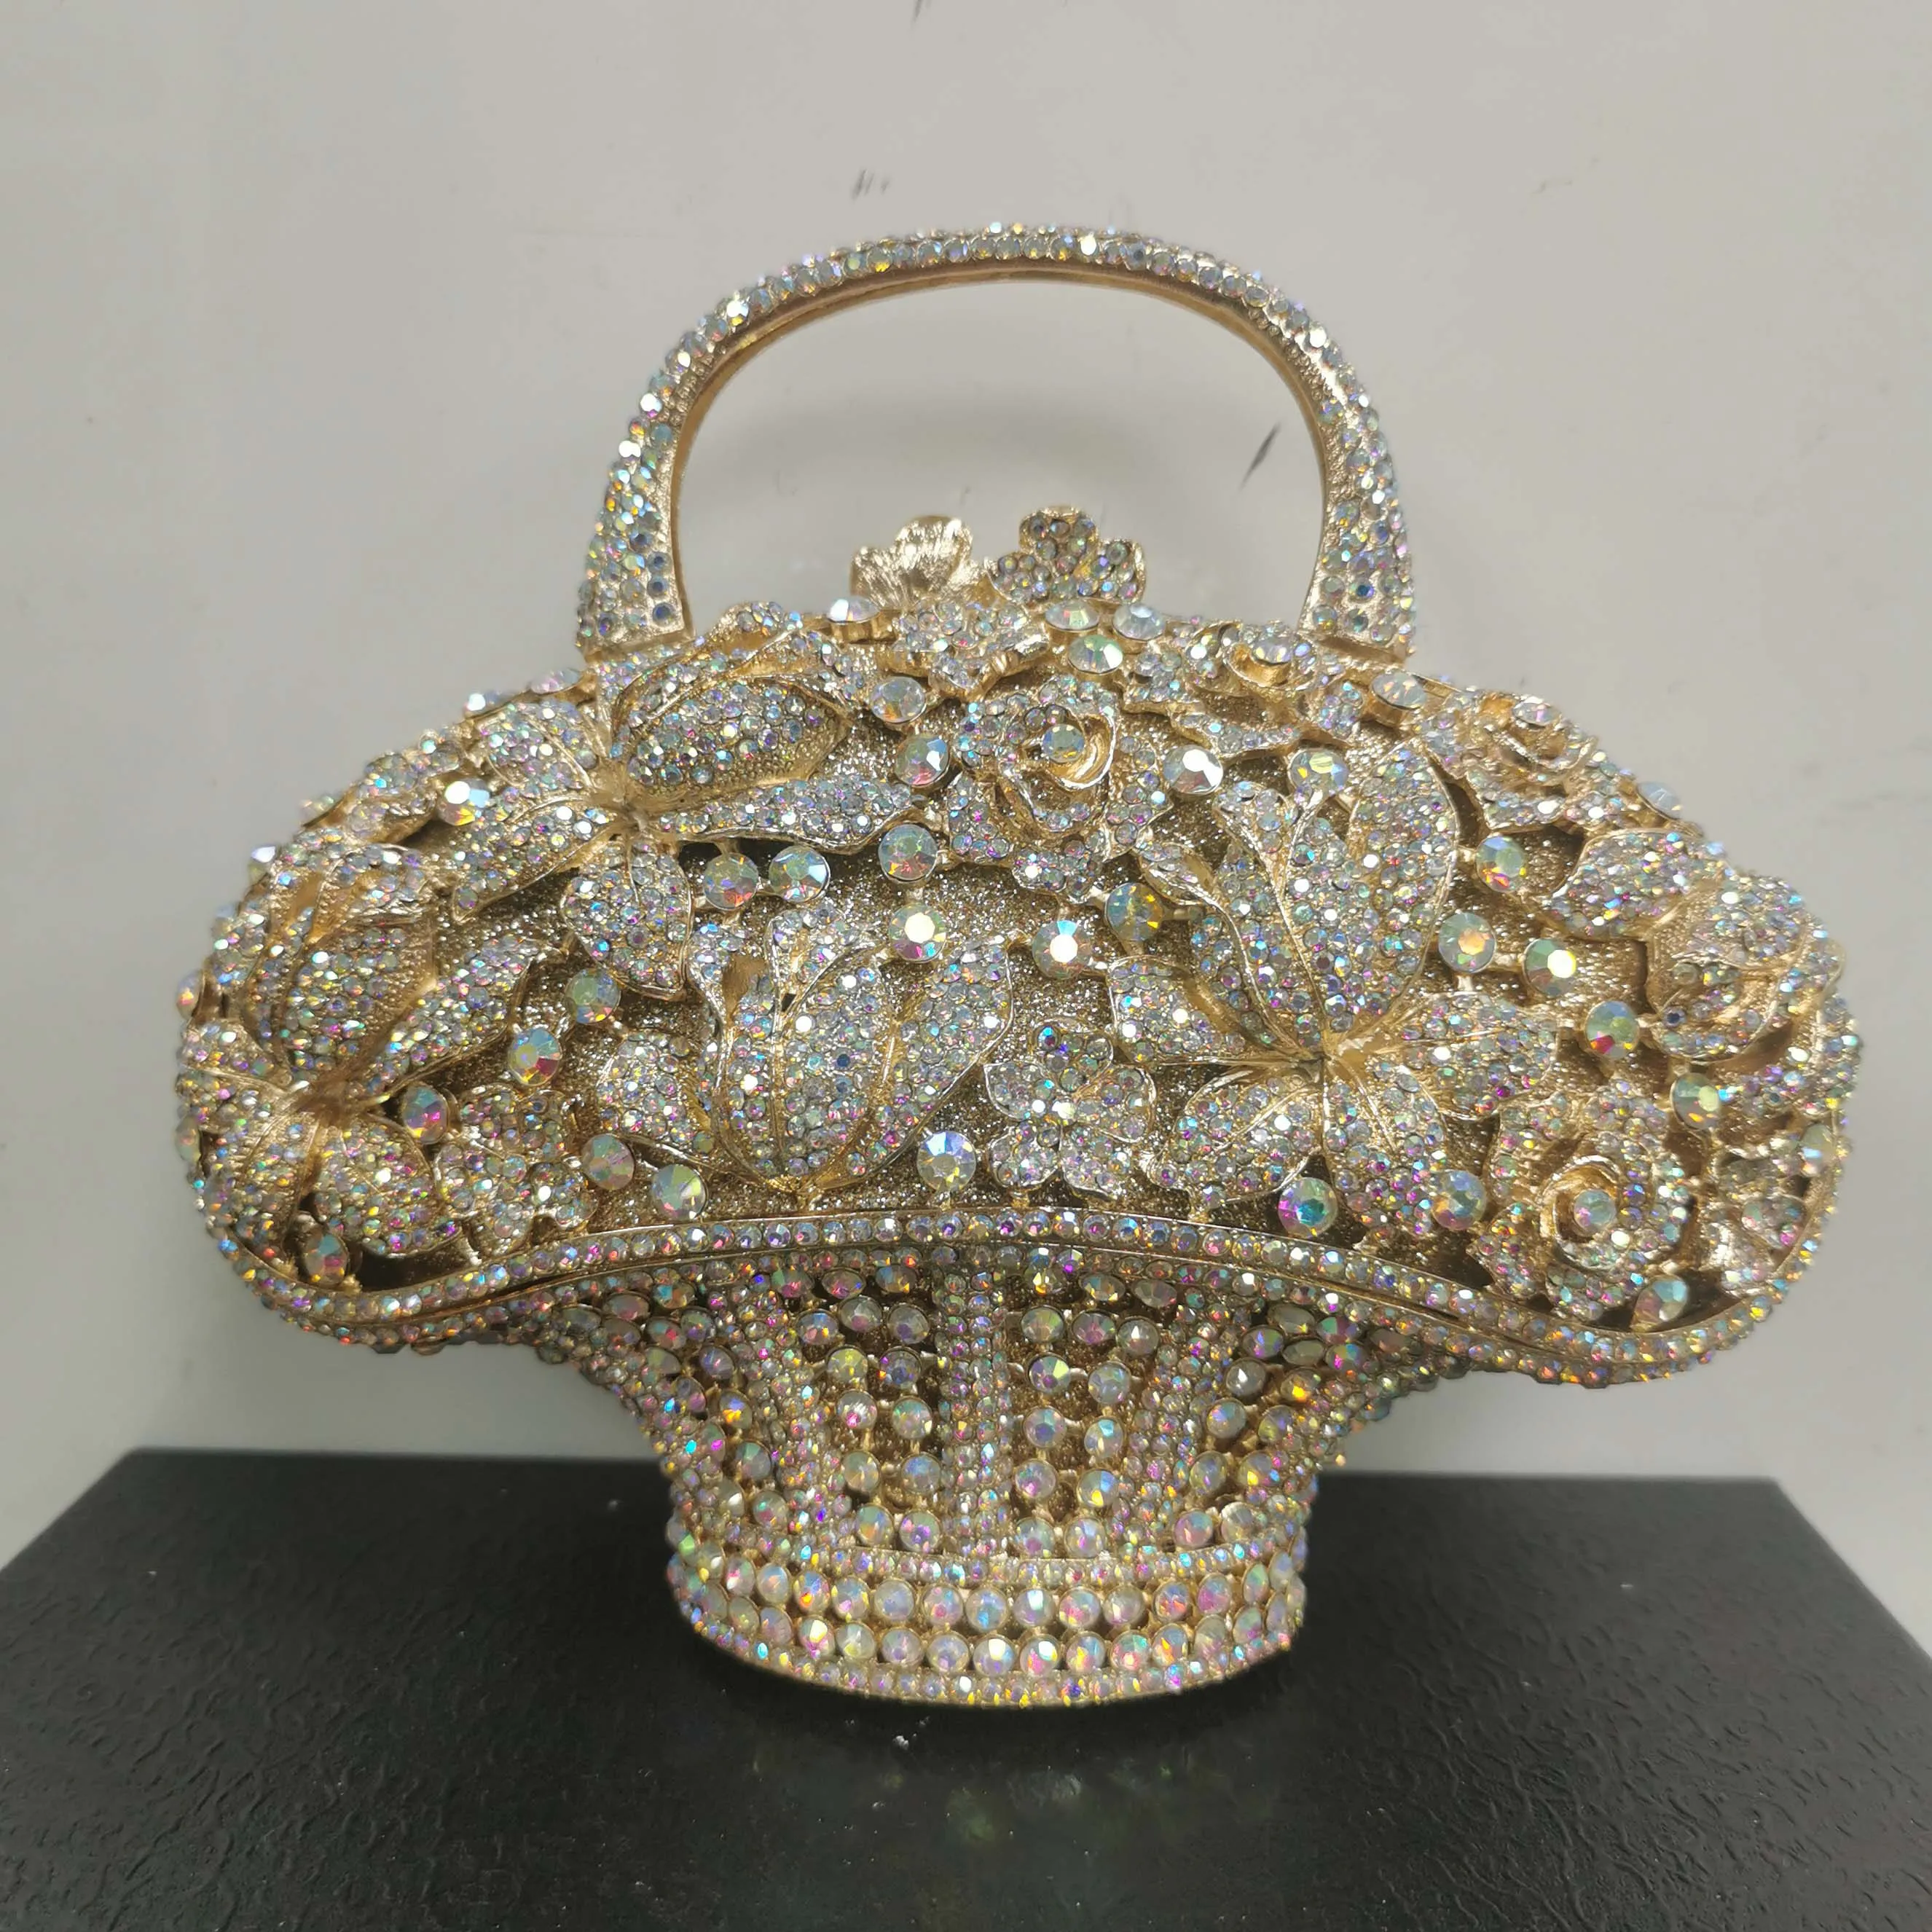 Buy Diamond Clutch Bag Online In India - Etsy India